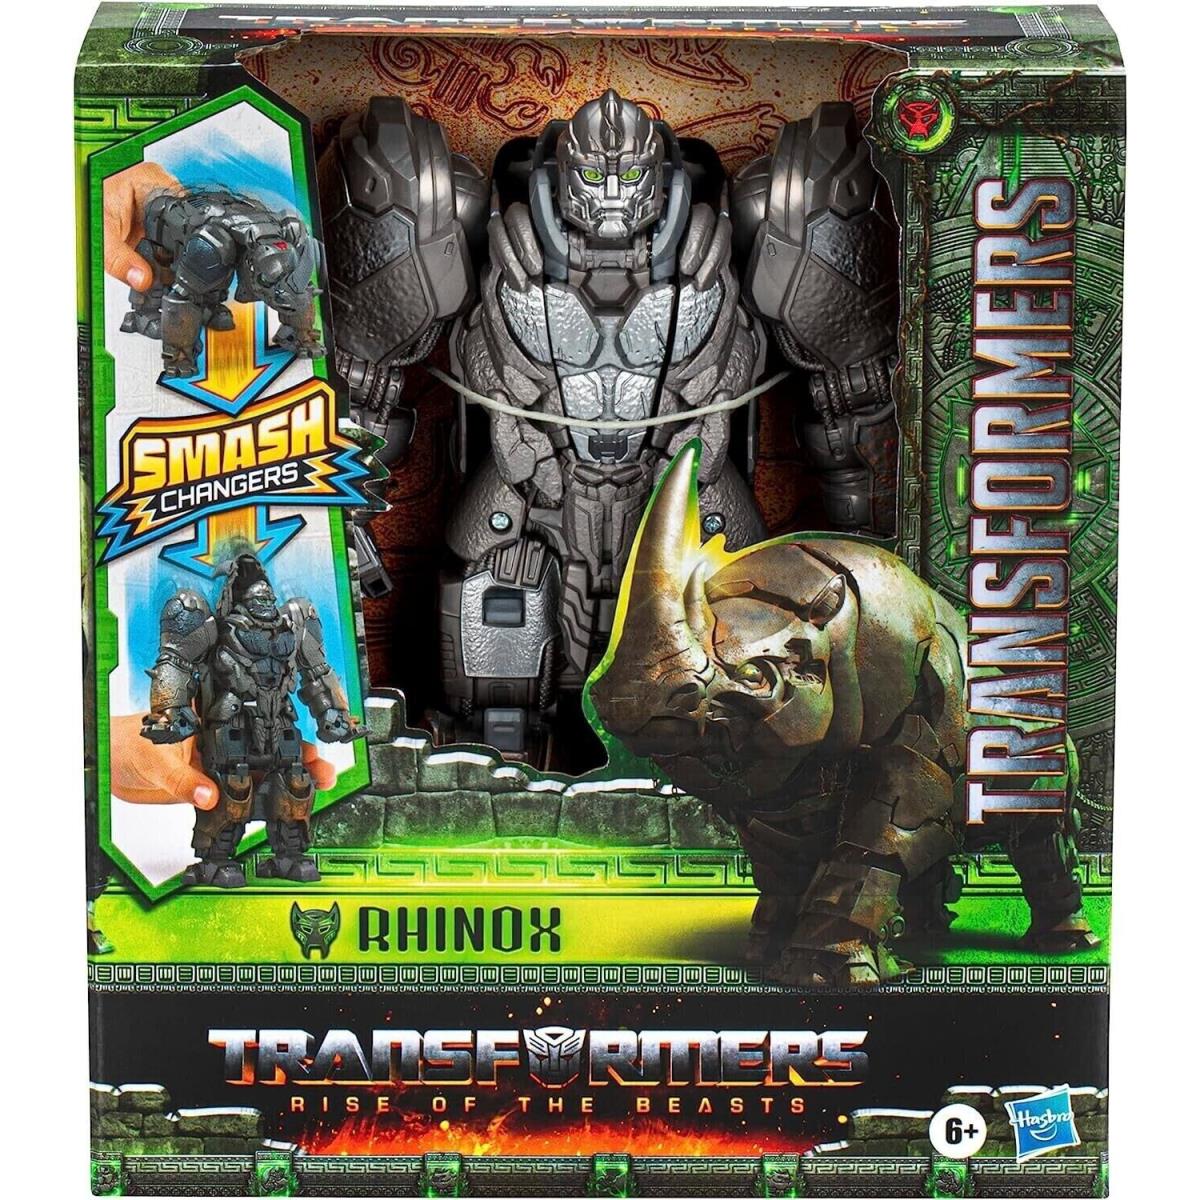 Hasbro Transformers: Rise of The Beasts Movie Smash Changer Rhinox 9 Figure